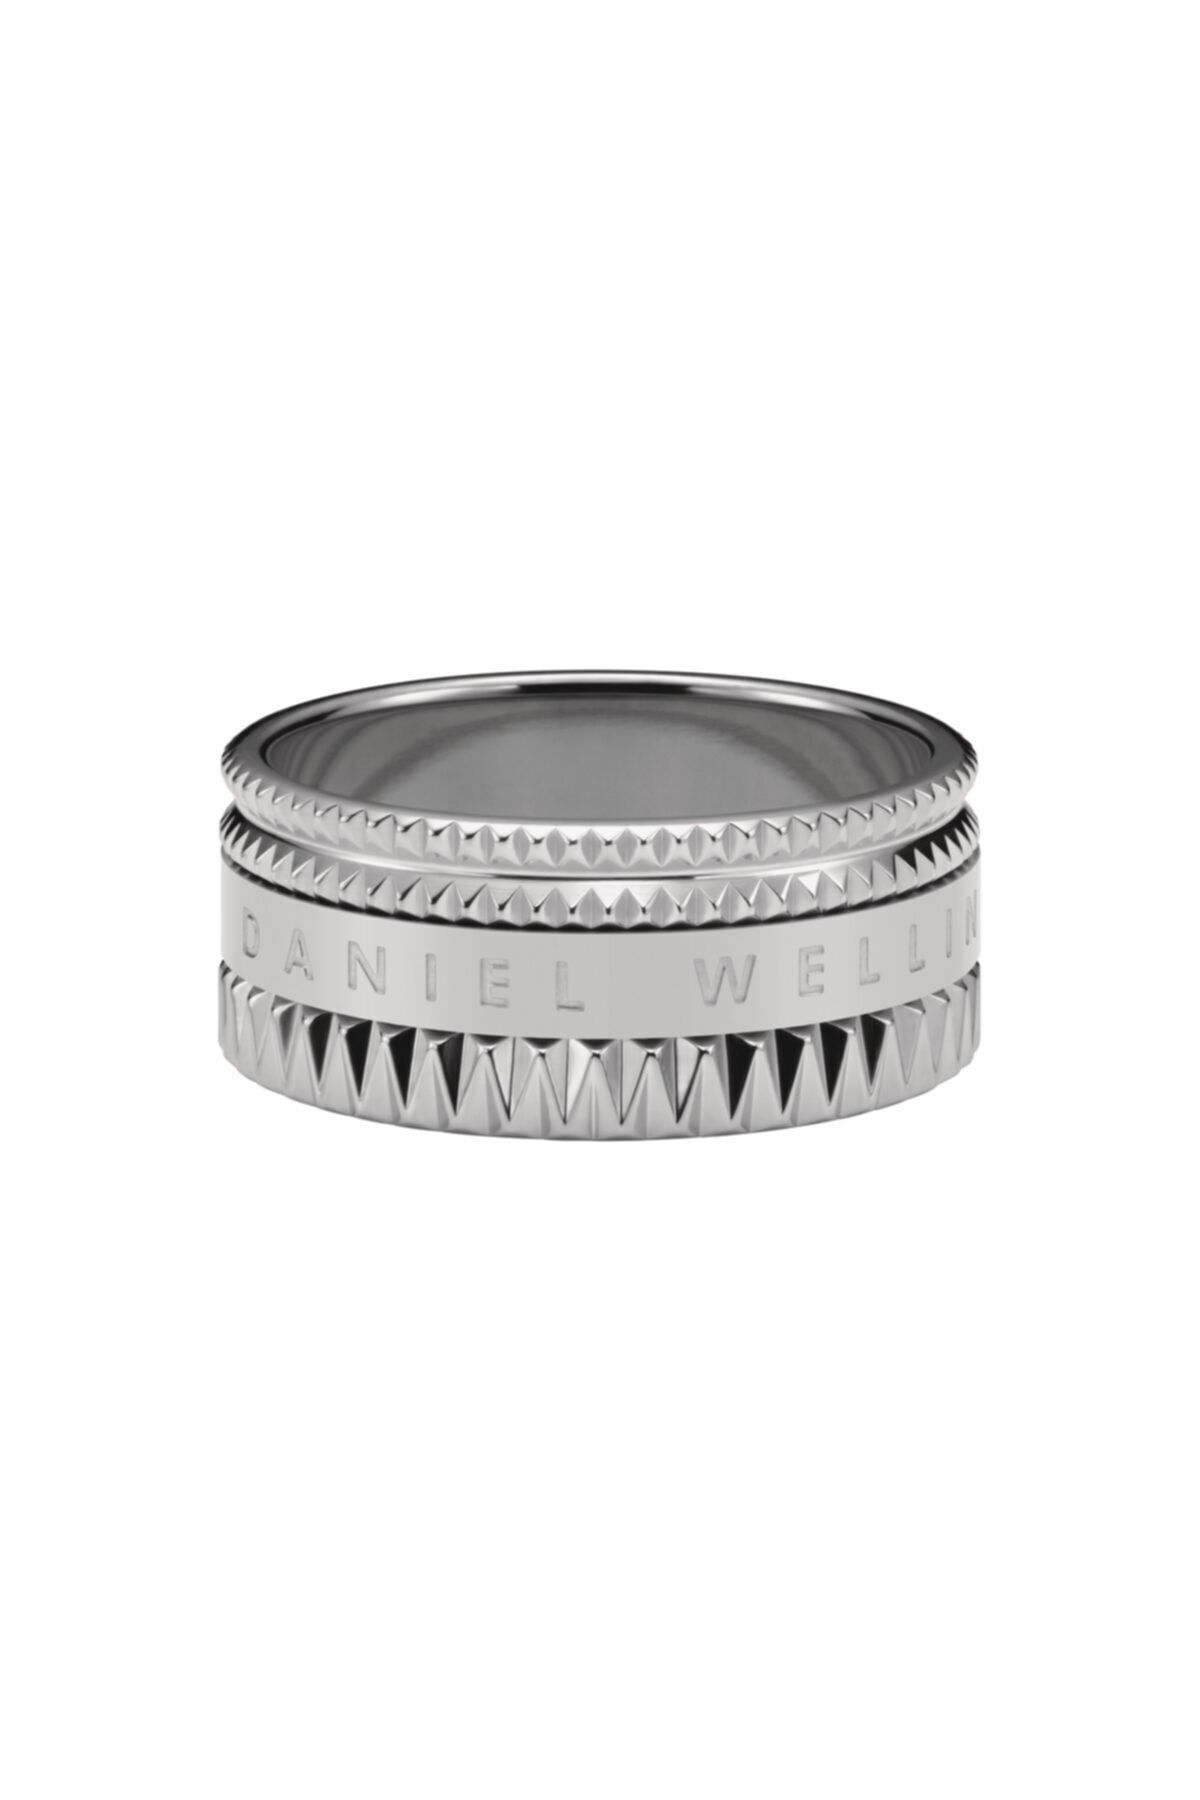 Daniel Wellington Elevation Ring, Silver 56